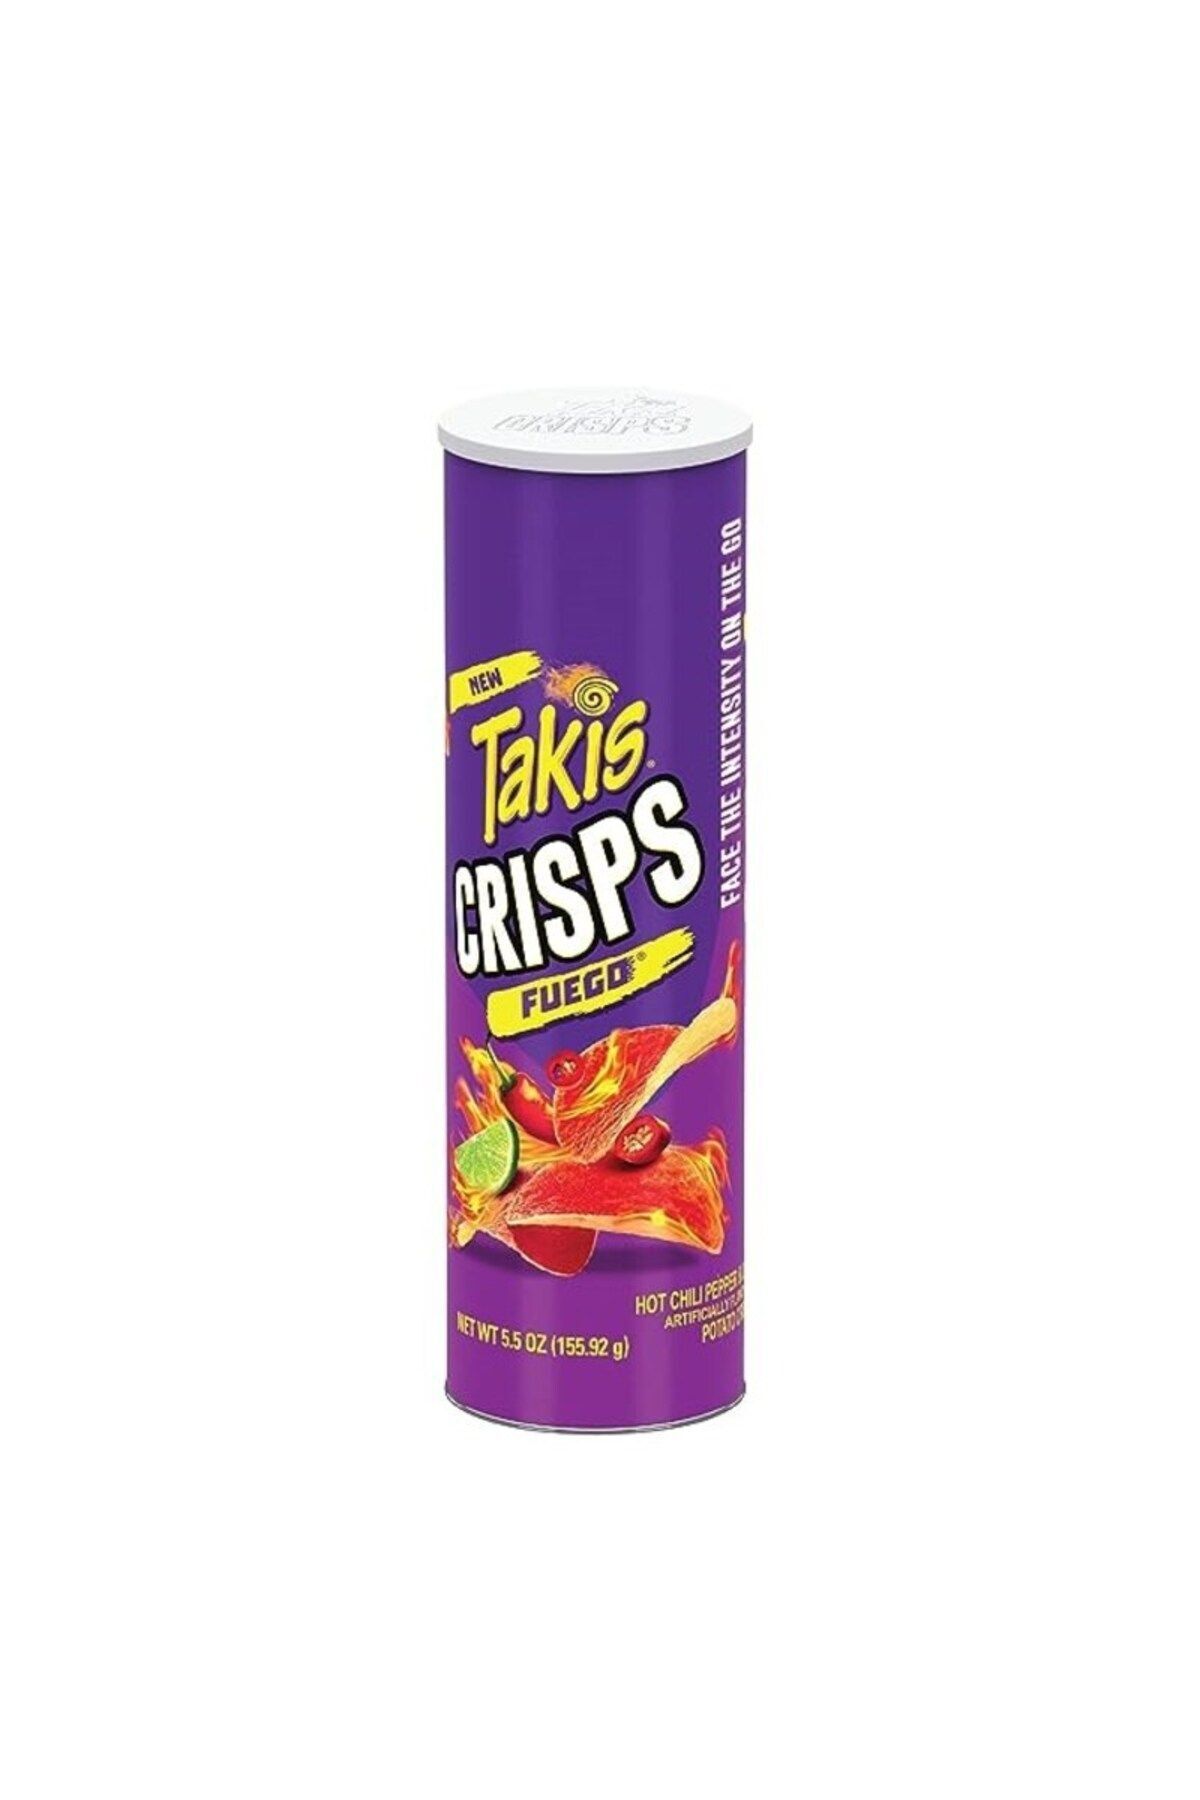 Takis Crisps Fuego - Hot Chili Pepper and Lime Flavored Potato Crisps 155,92g